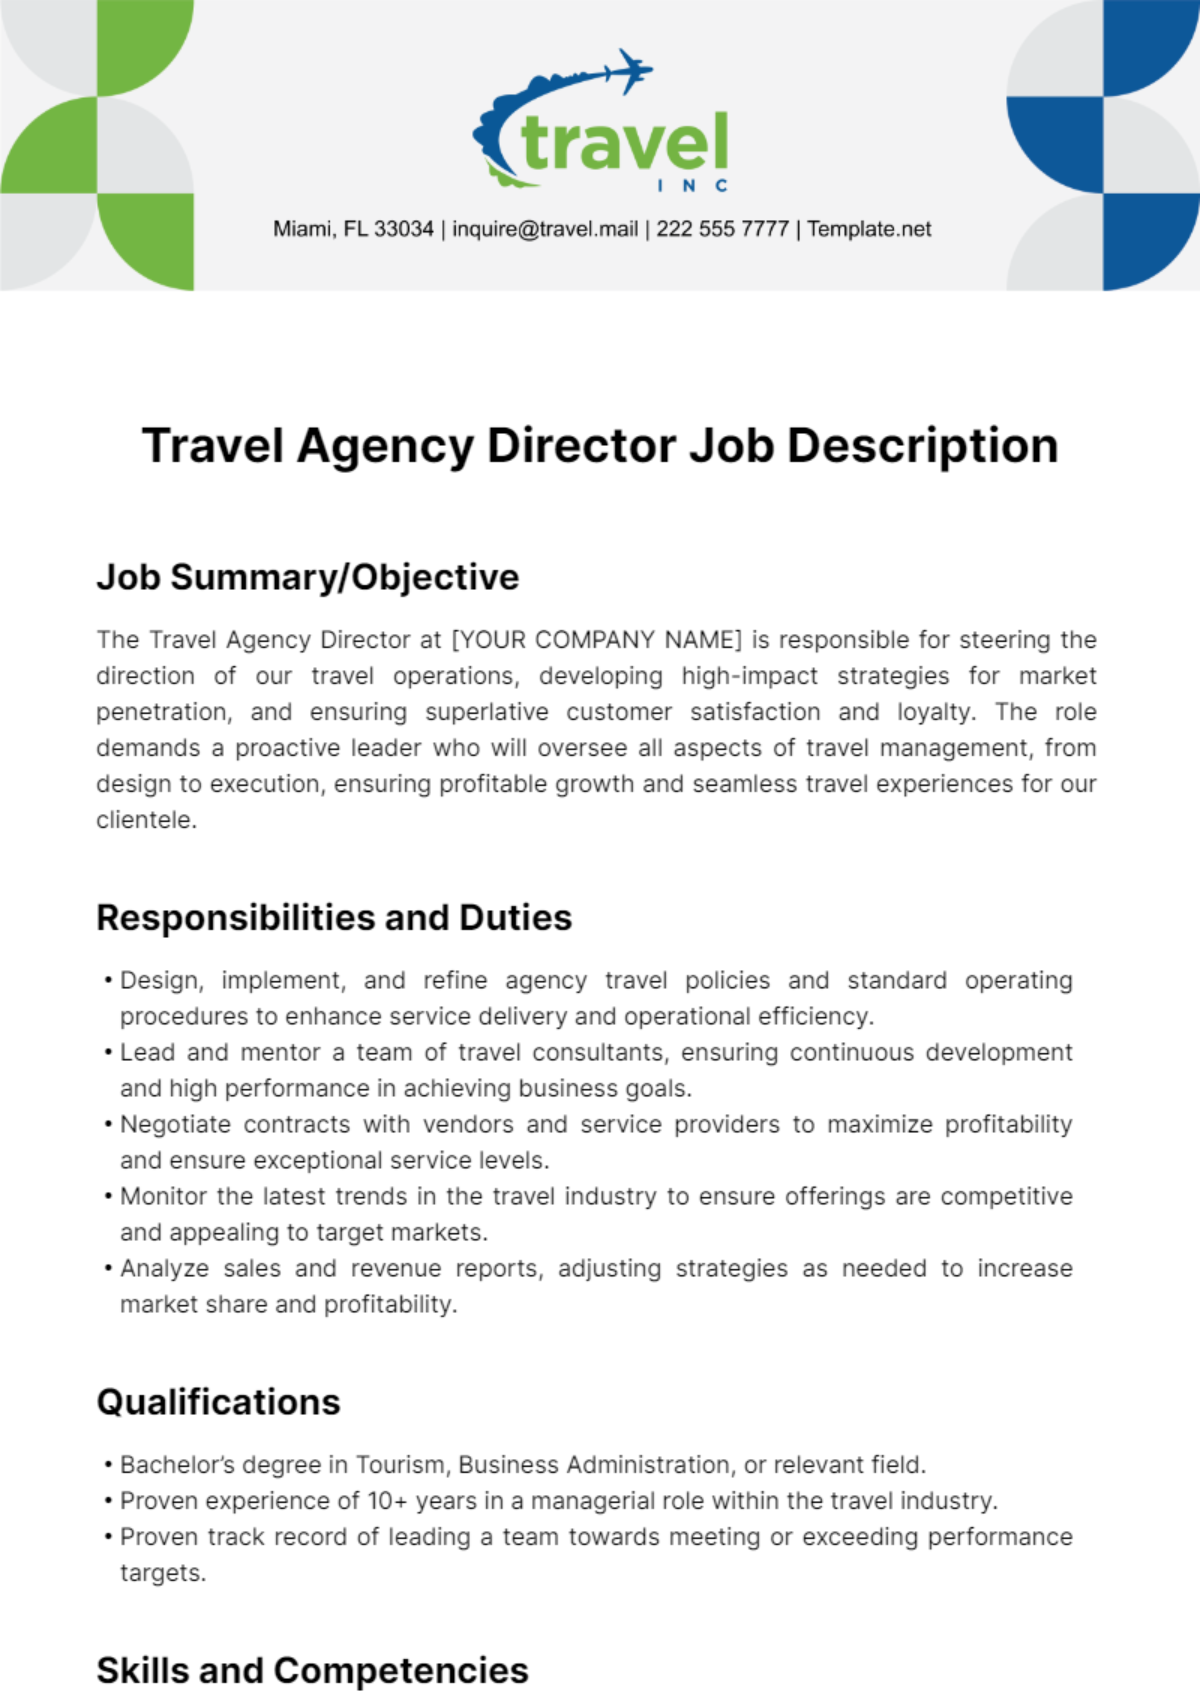 Free Travel Agency Director Job Description Template